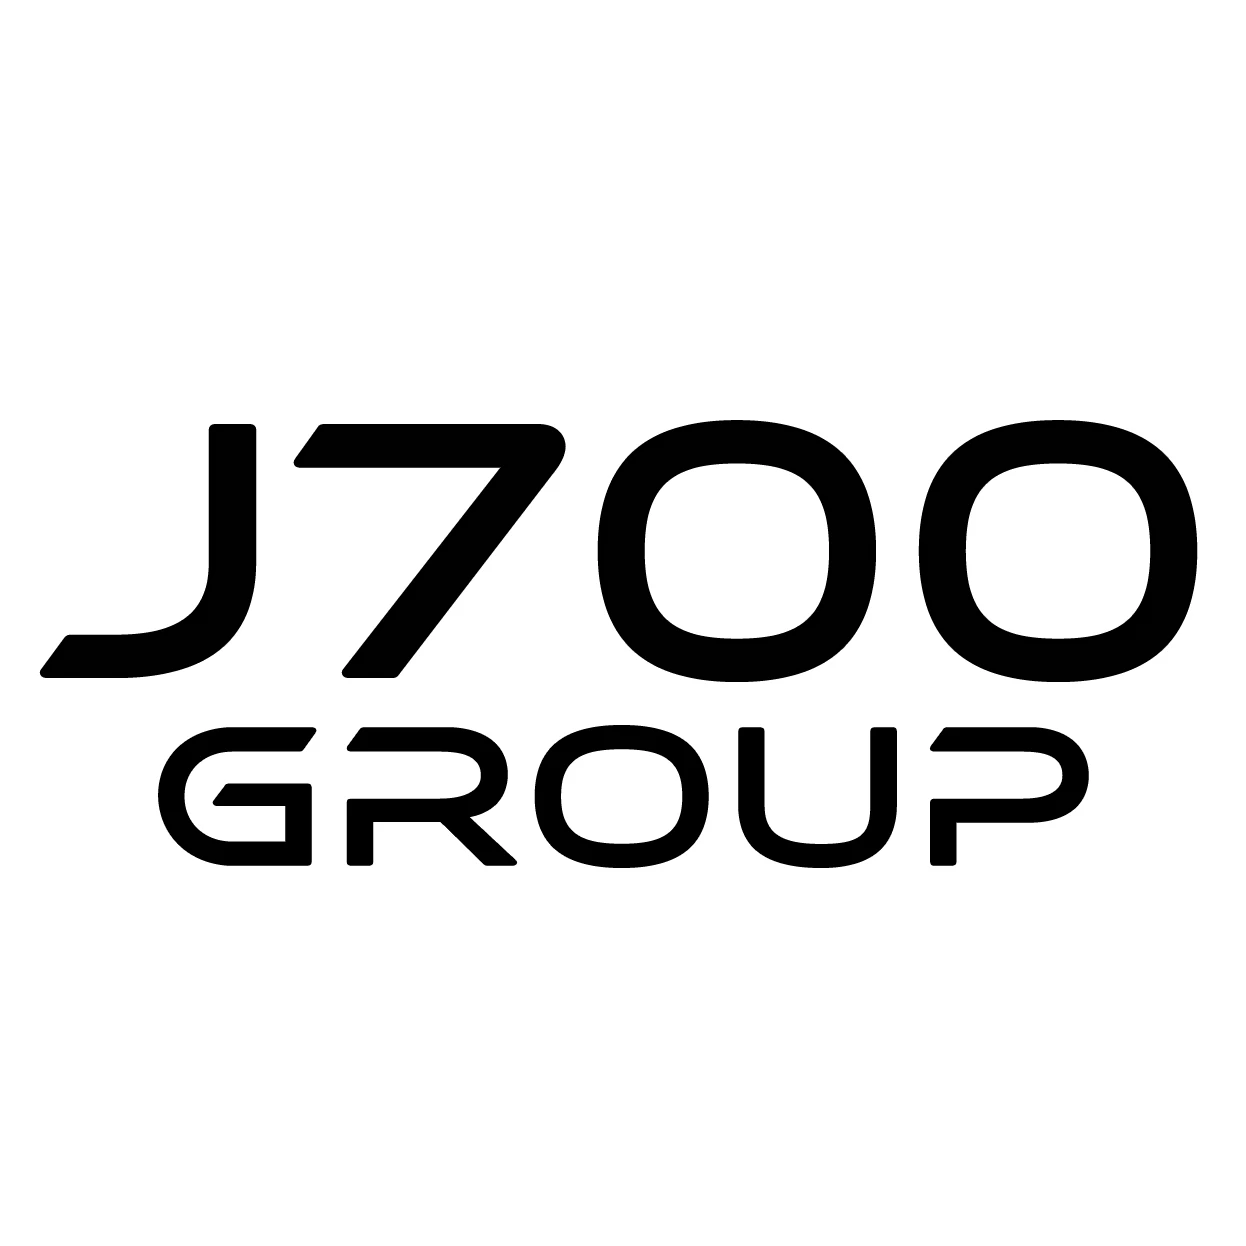 J700 Group Limited Logo